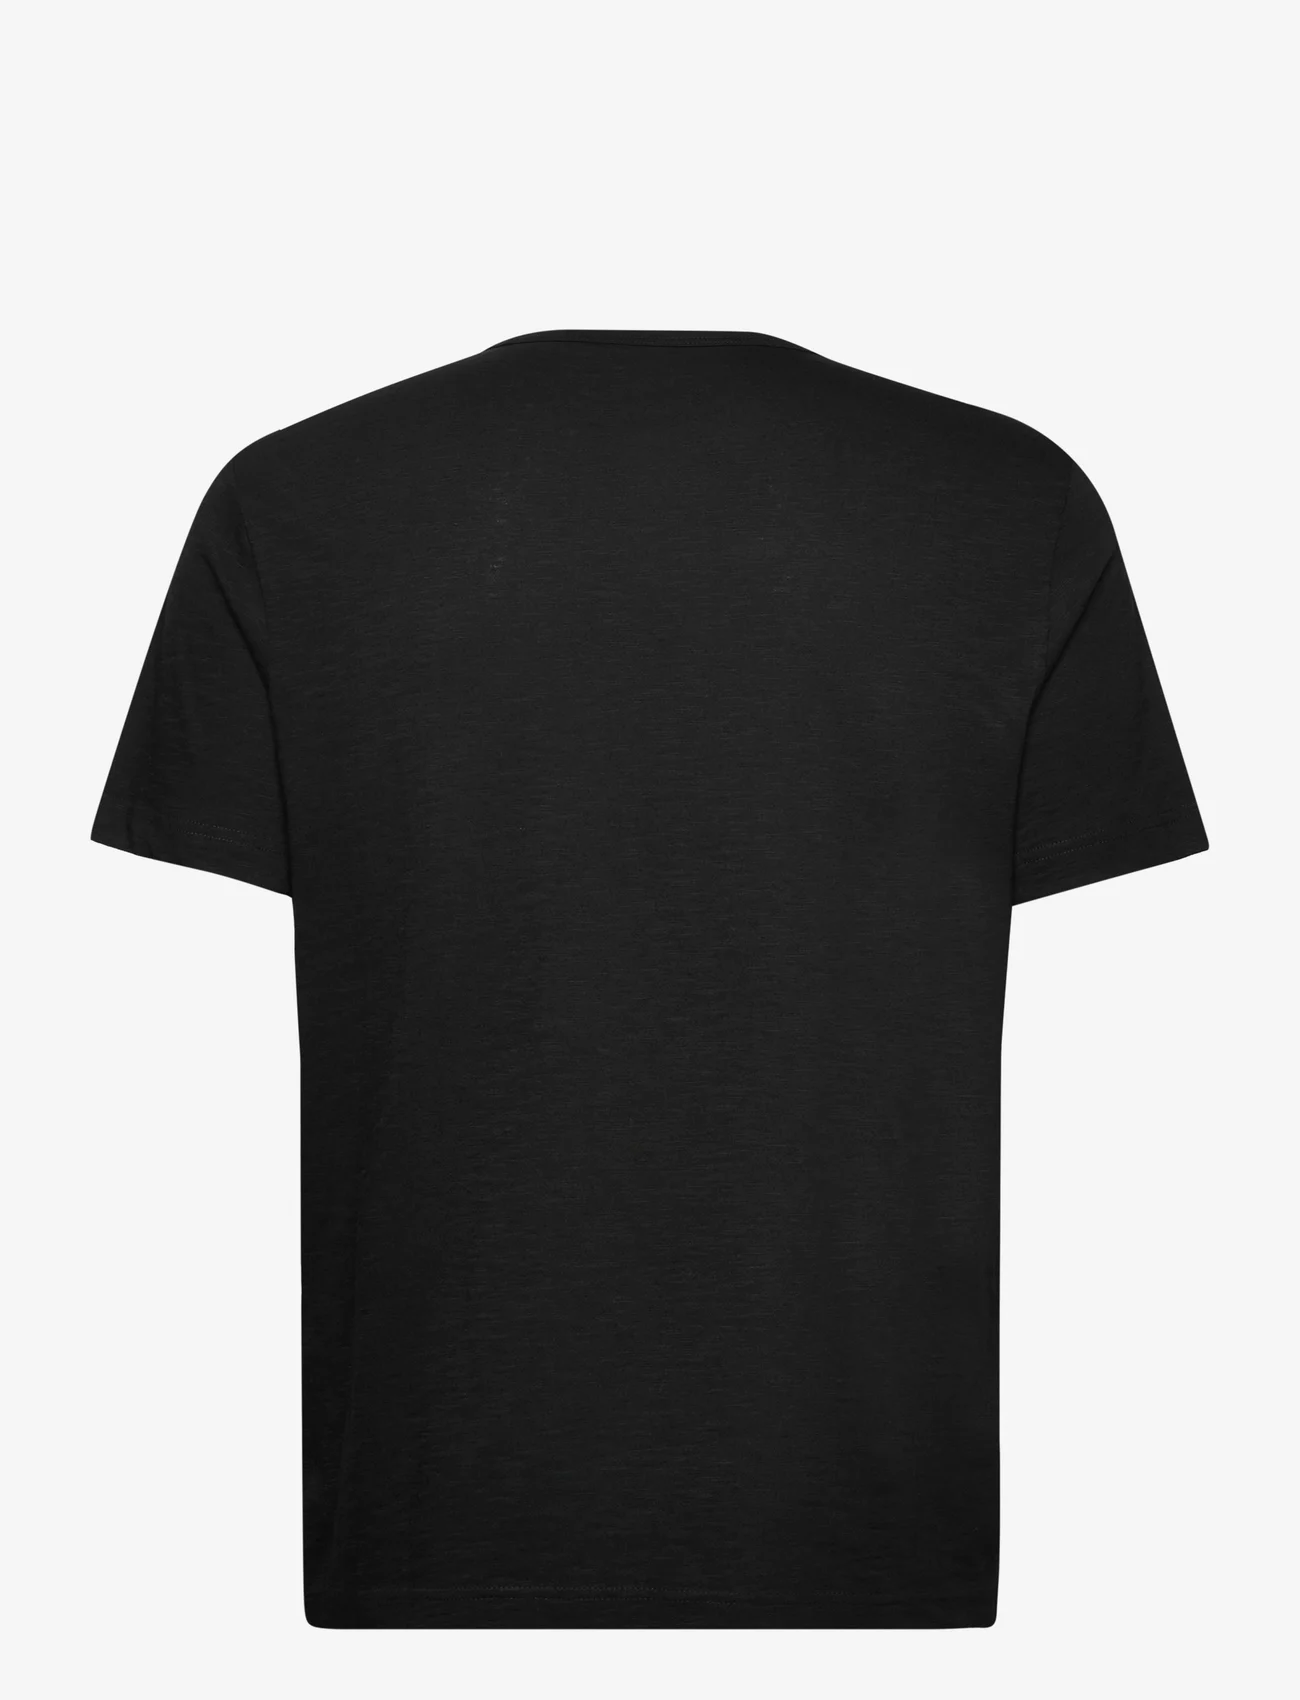 Tom Tailor - printed t-shirt - die niedrigsten preise - black - 1